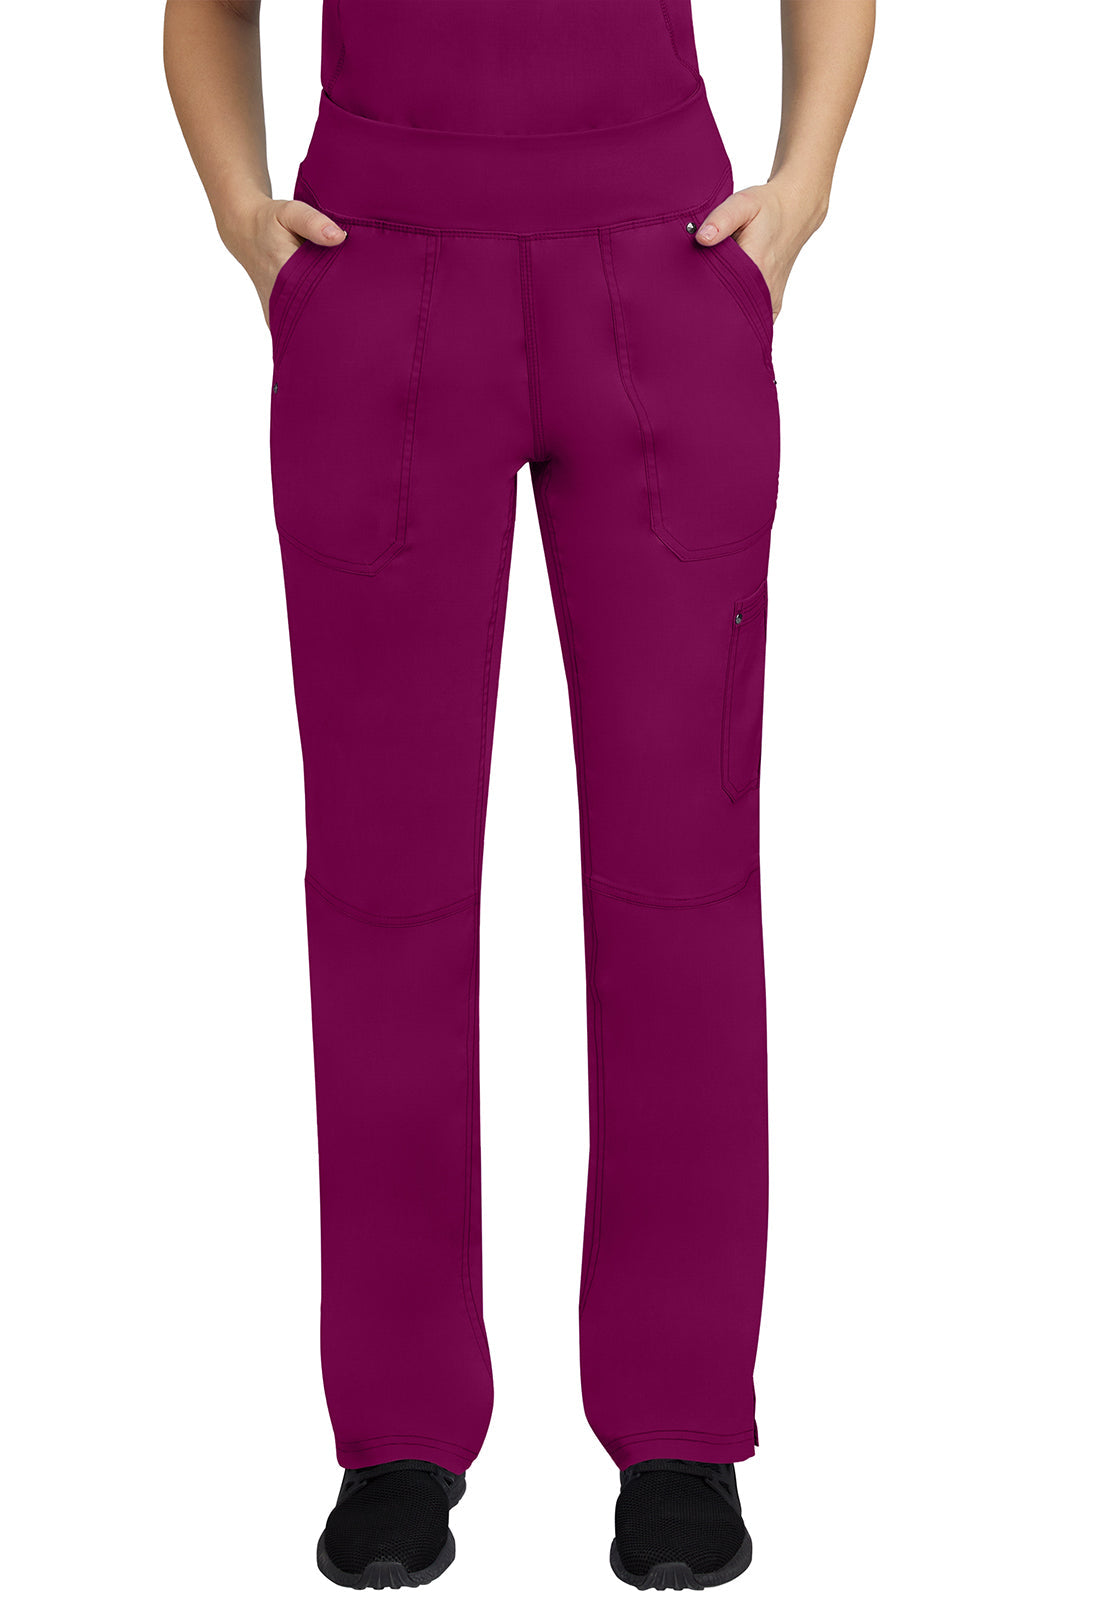 Healing Hands Purple Label Tori Yoga Pants (Regular 2XL-5XL)